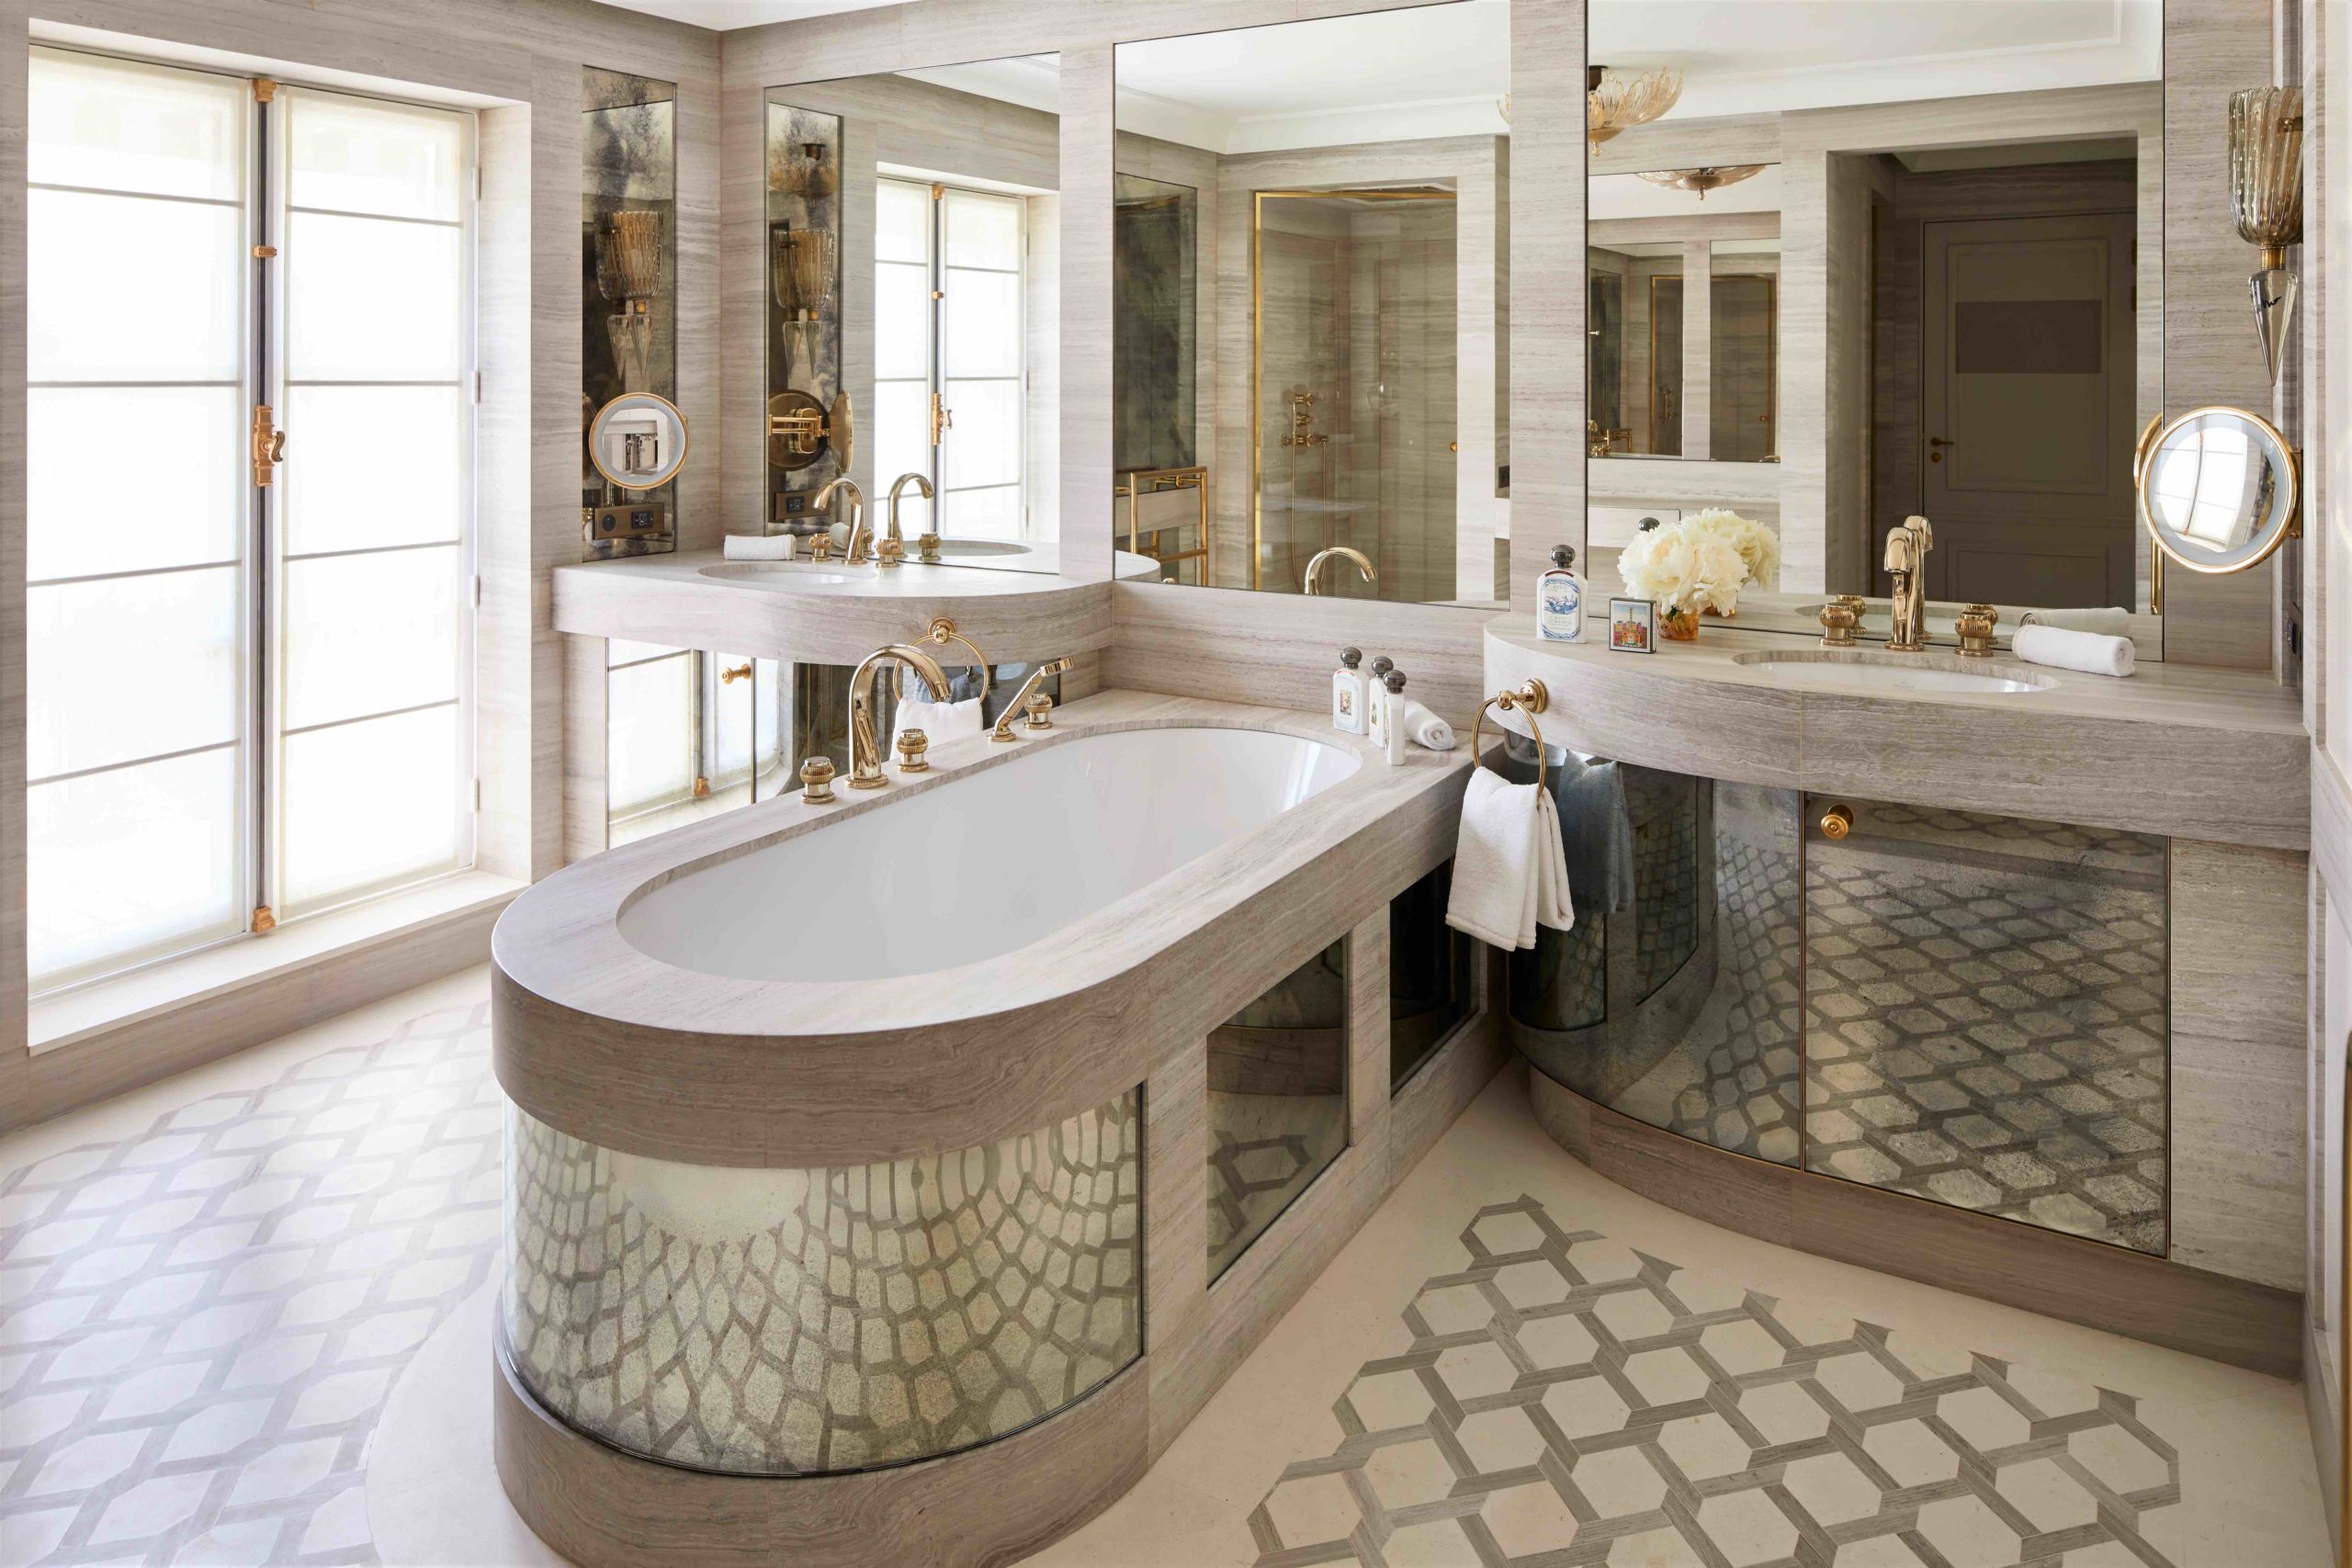 3.2. Suite Louis XV - Bath room